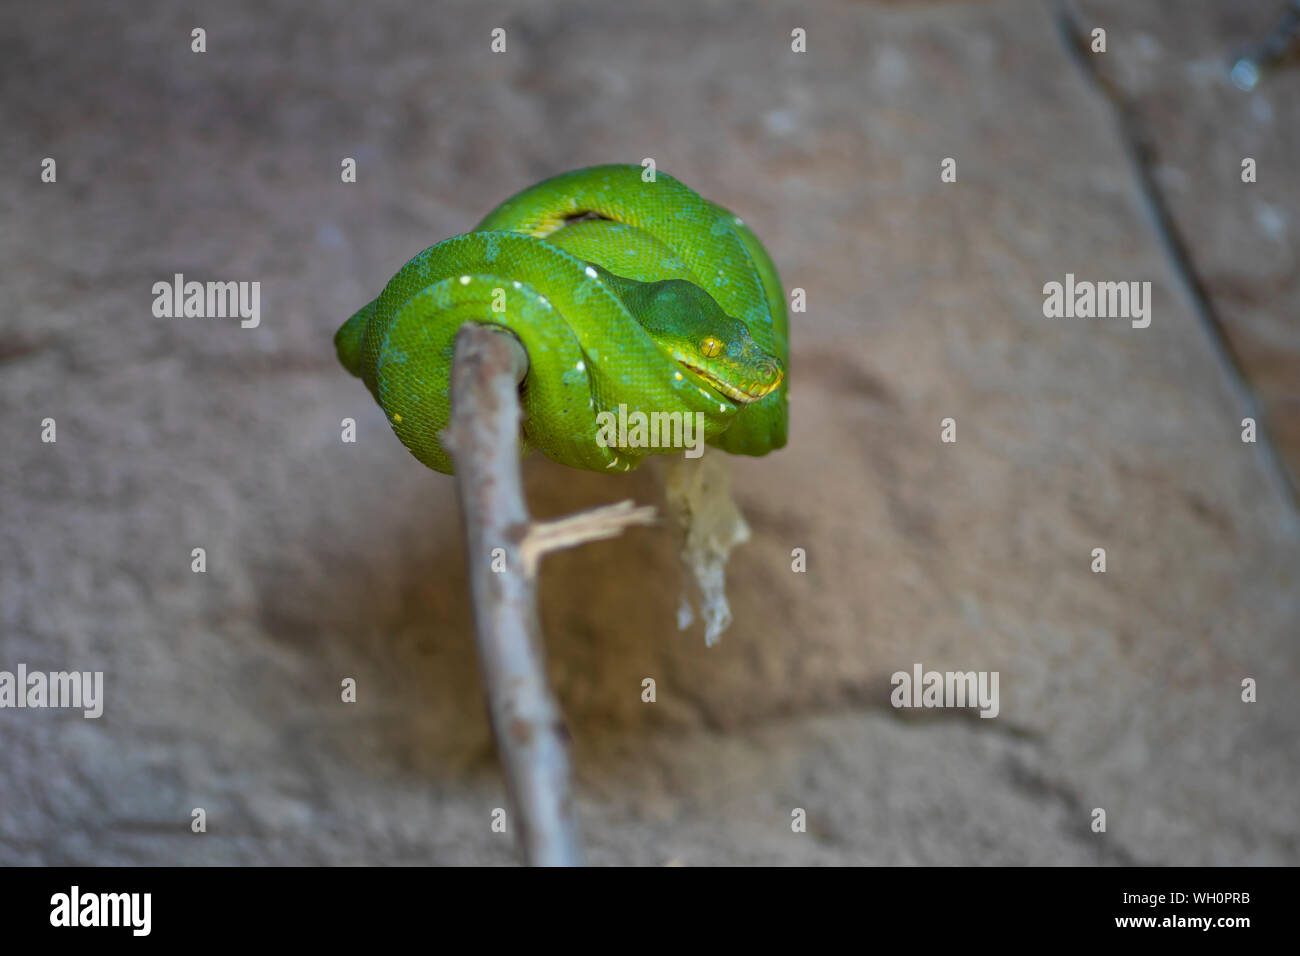 Green snake, Poisonous animal concept Stock Photo